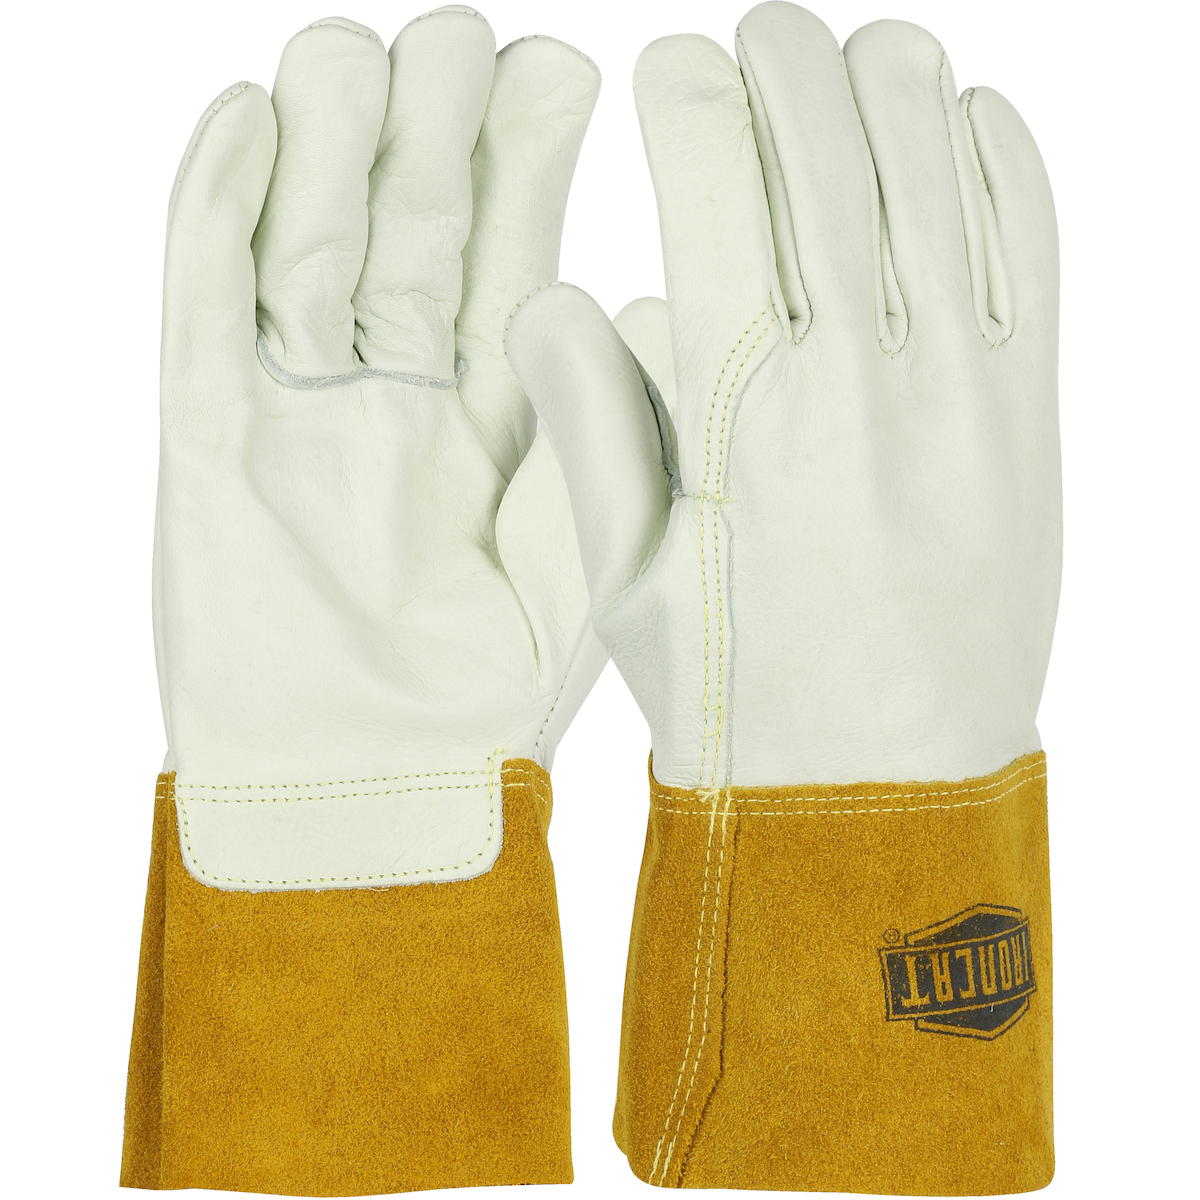 Premium Welders Welding Gloves Gauntlets Reinforced-Lined-K E V L A R Stitched